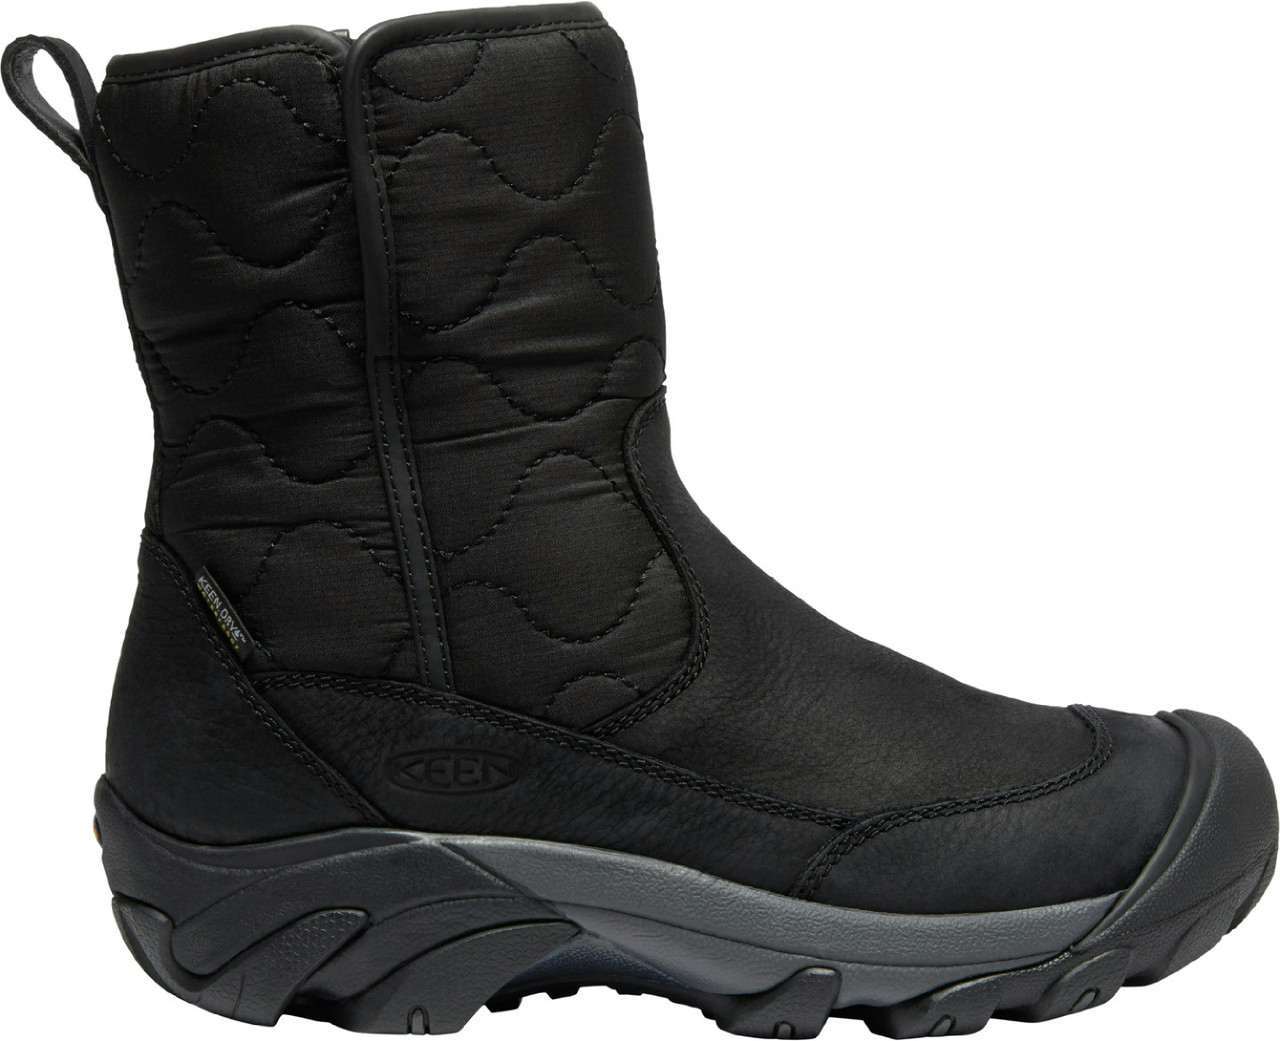 Betty Pull On Waterproof Boots Black/Black